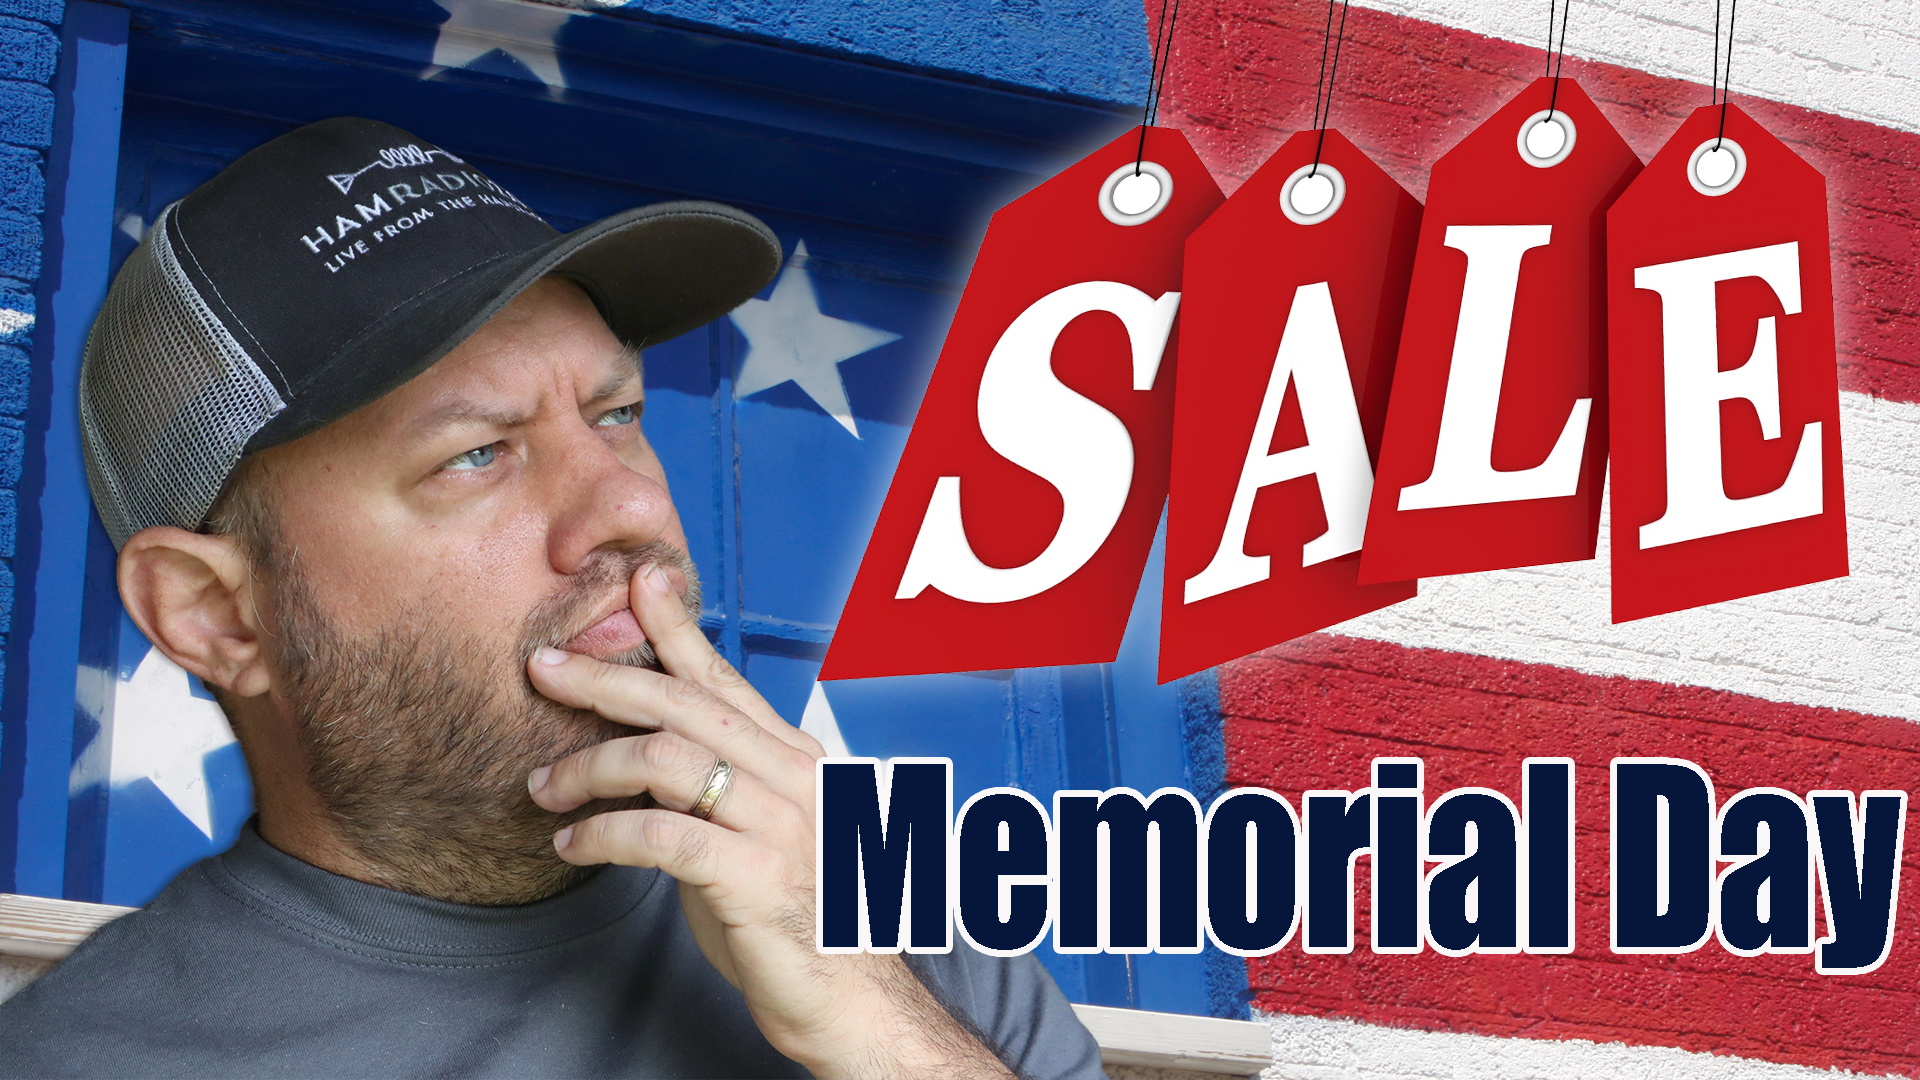 Episode 379: Ham Radio Shopping Deals for MEMORIAL DAY Weekend, Hamvention Deals Extended!